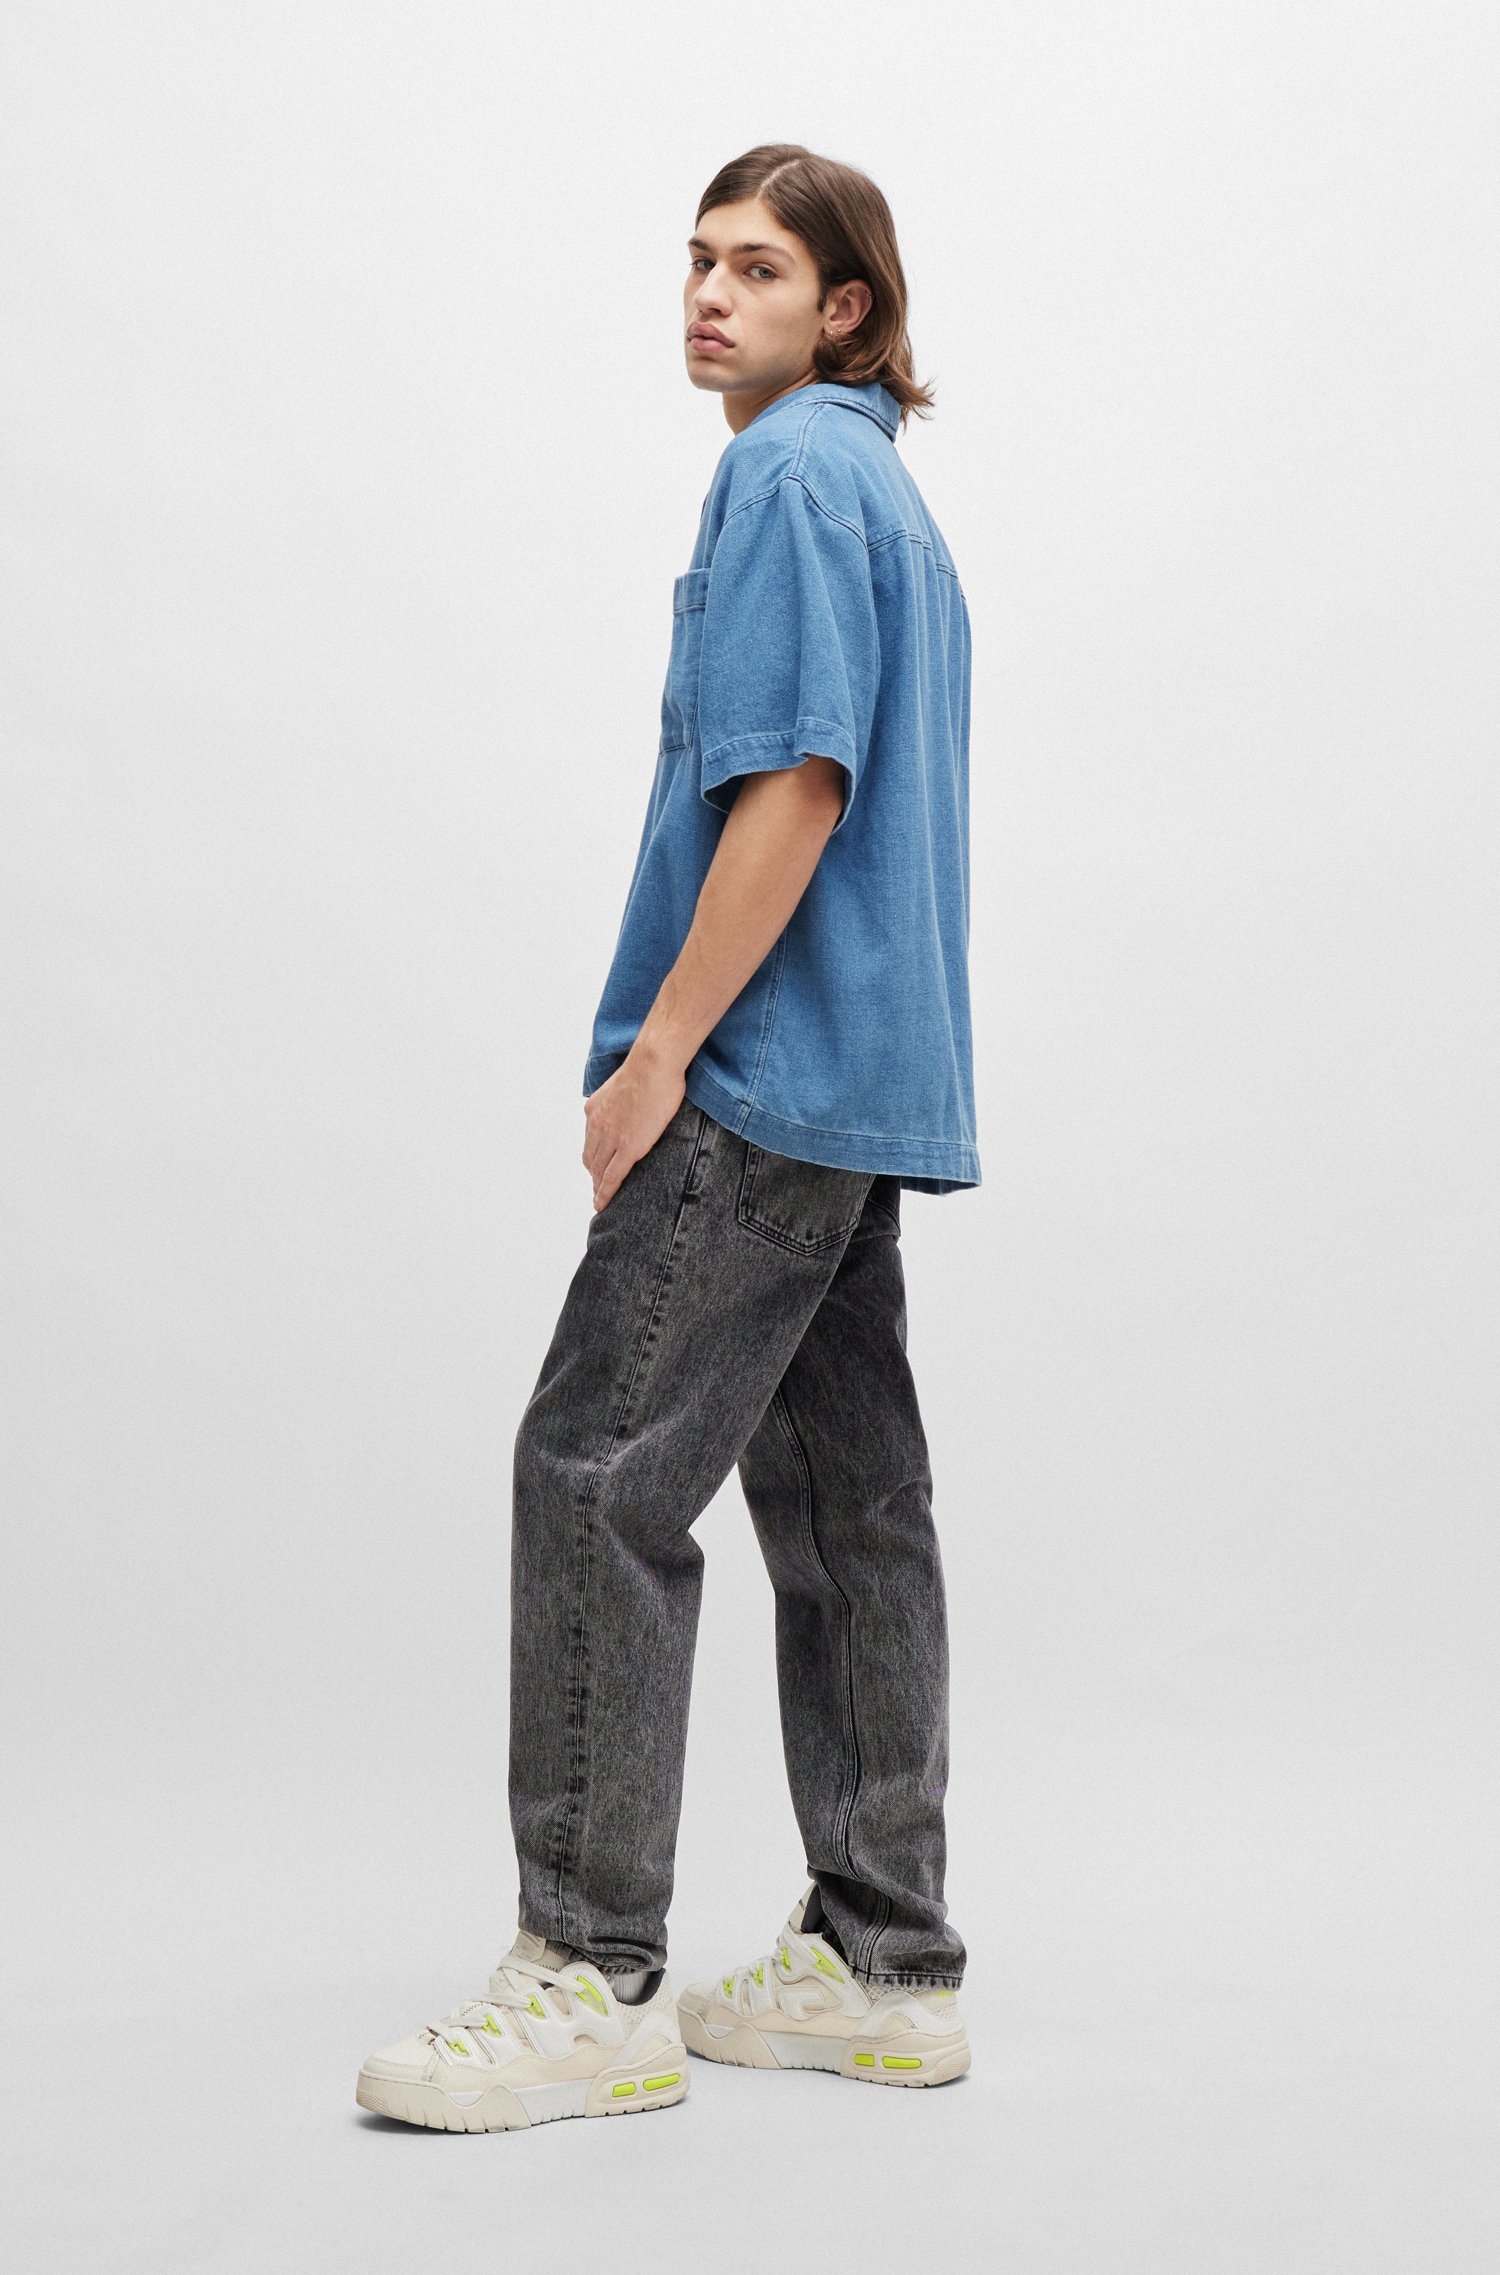 Camisa de manga corta oversize fit en denim algodón azul